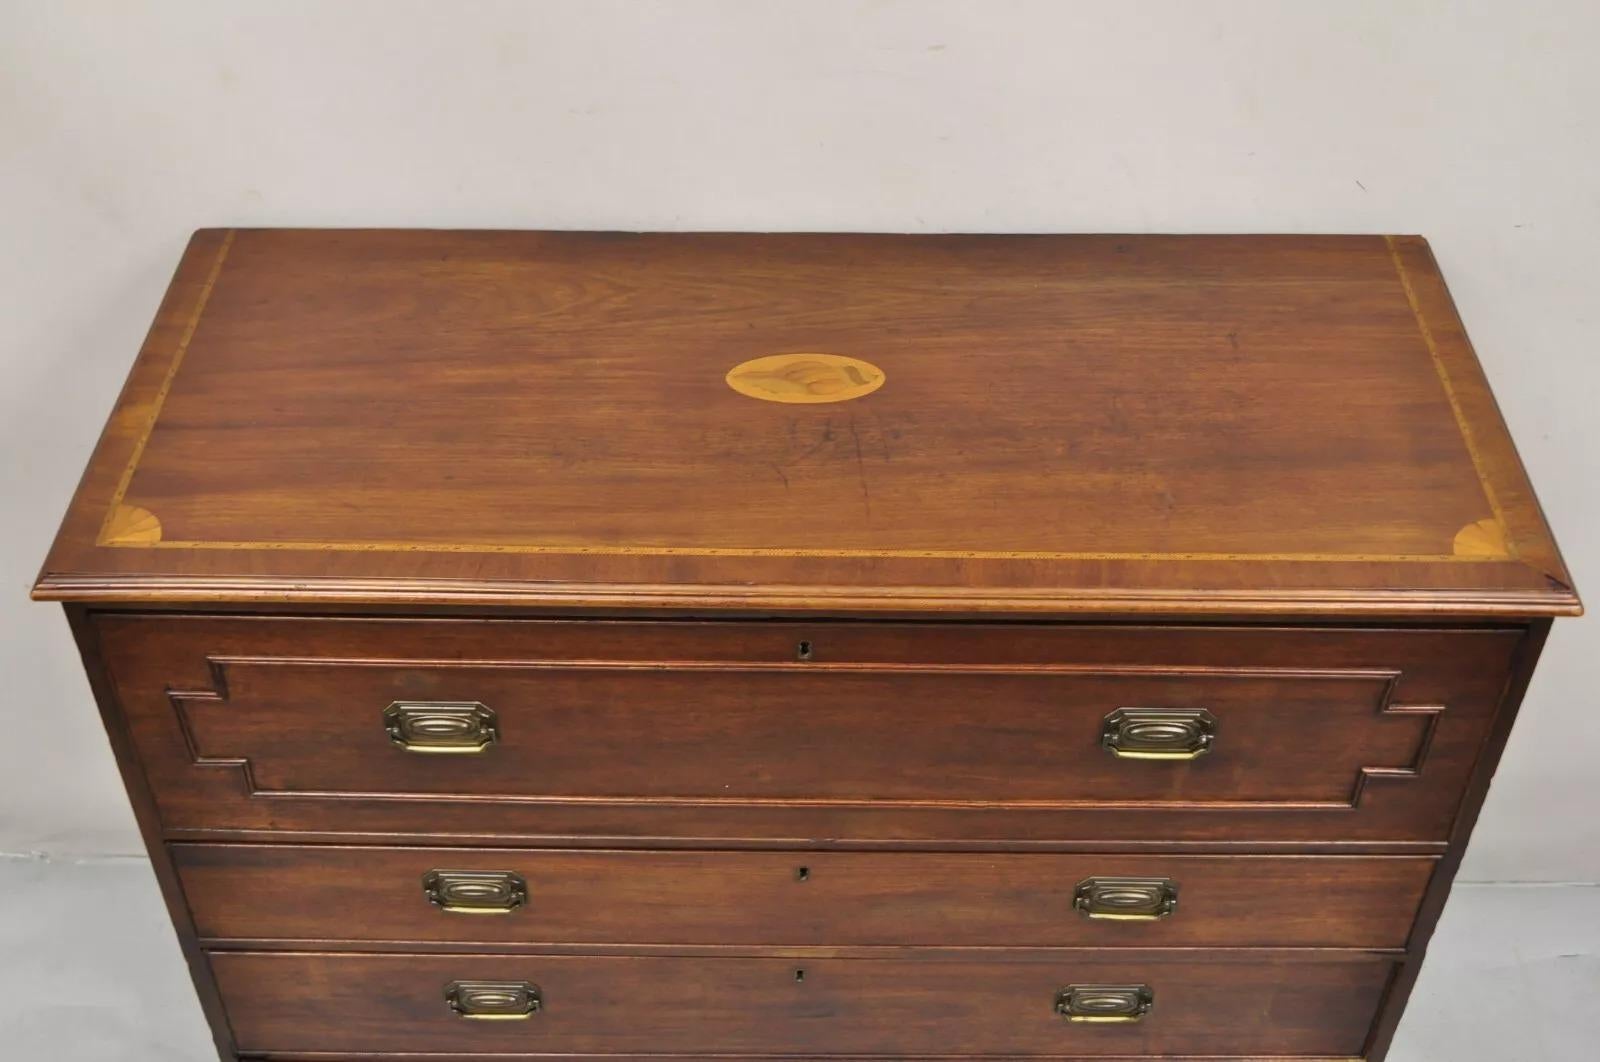 19th Century Antique English Edwardian Mahogany Chest of Drawers Secretary Desk Bureau For Sale